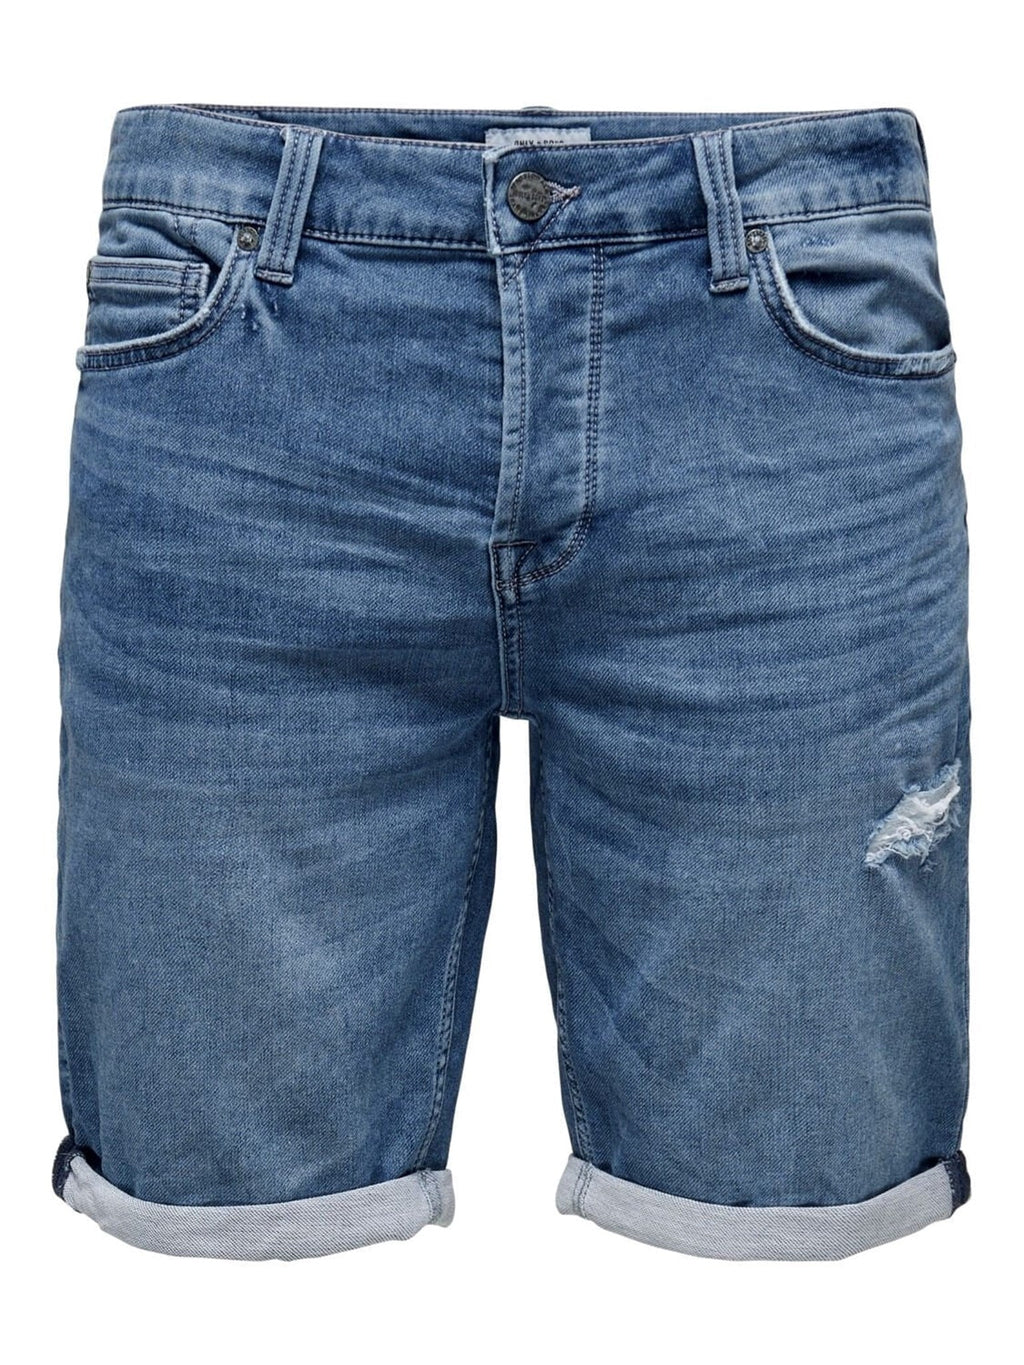 Shorts en jean - Denim bleu (avec étirement)